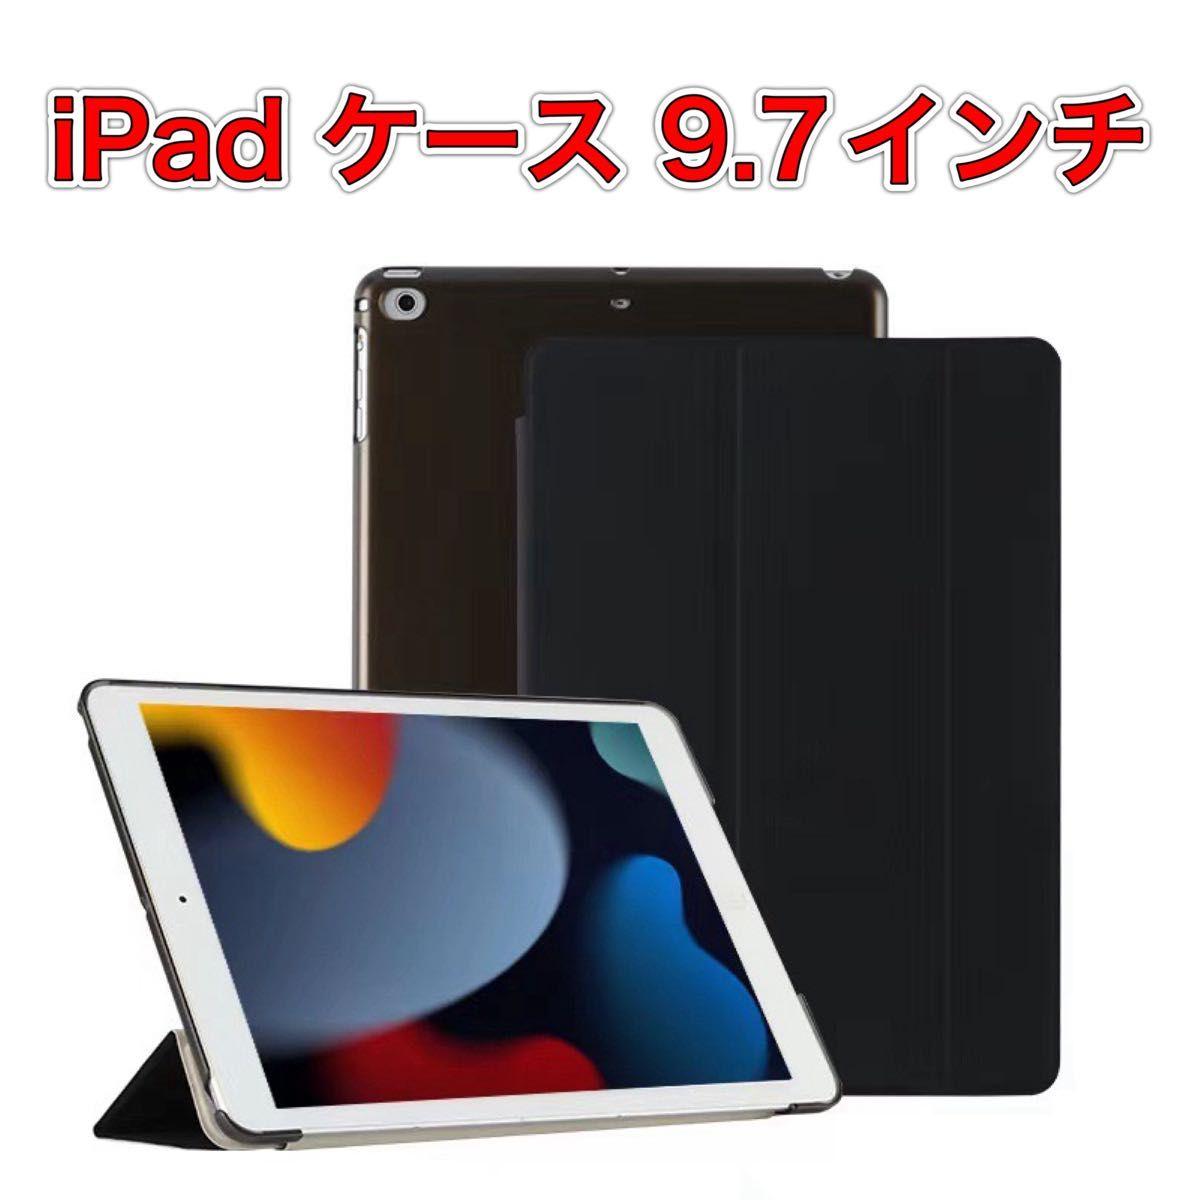 iPad ケース 9.7インチ 第5/6世代 Air シェルカバー 半透明 黒